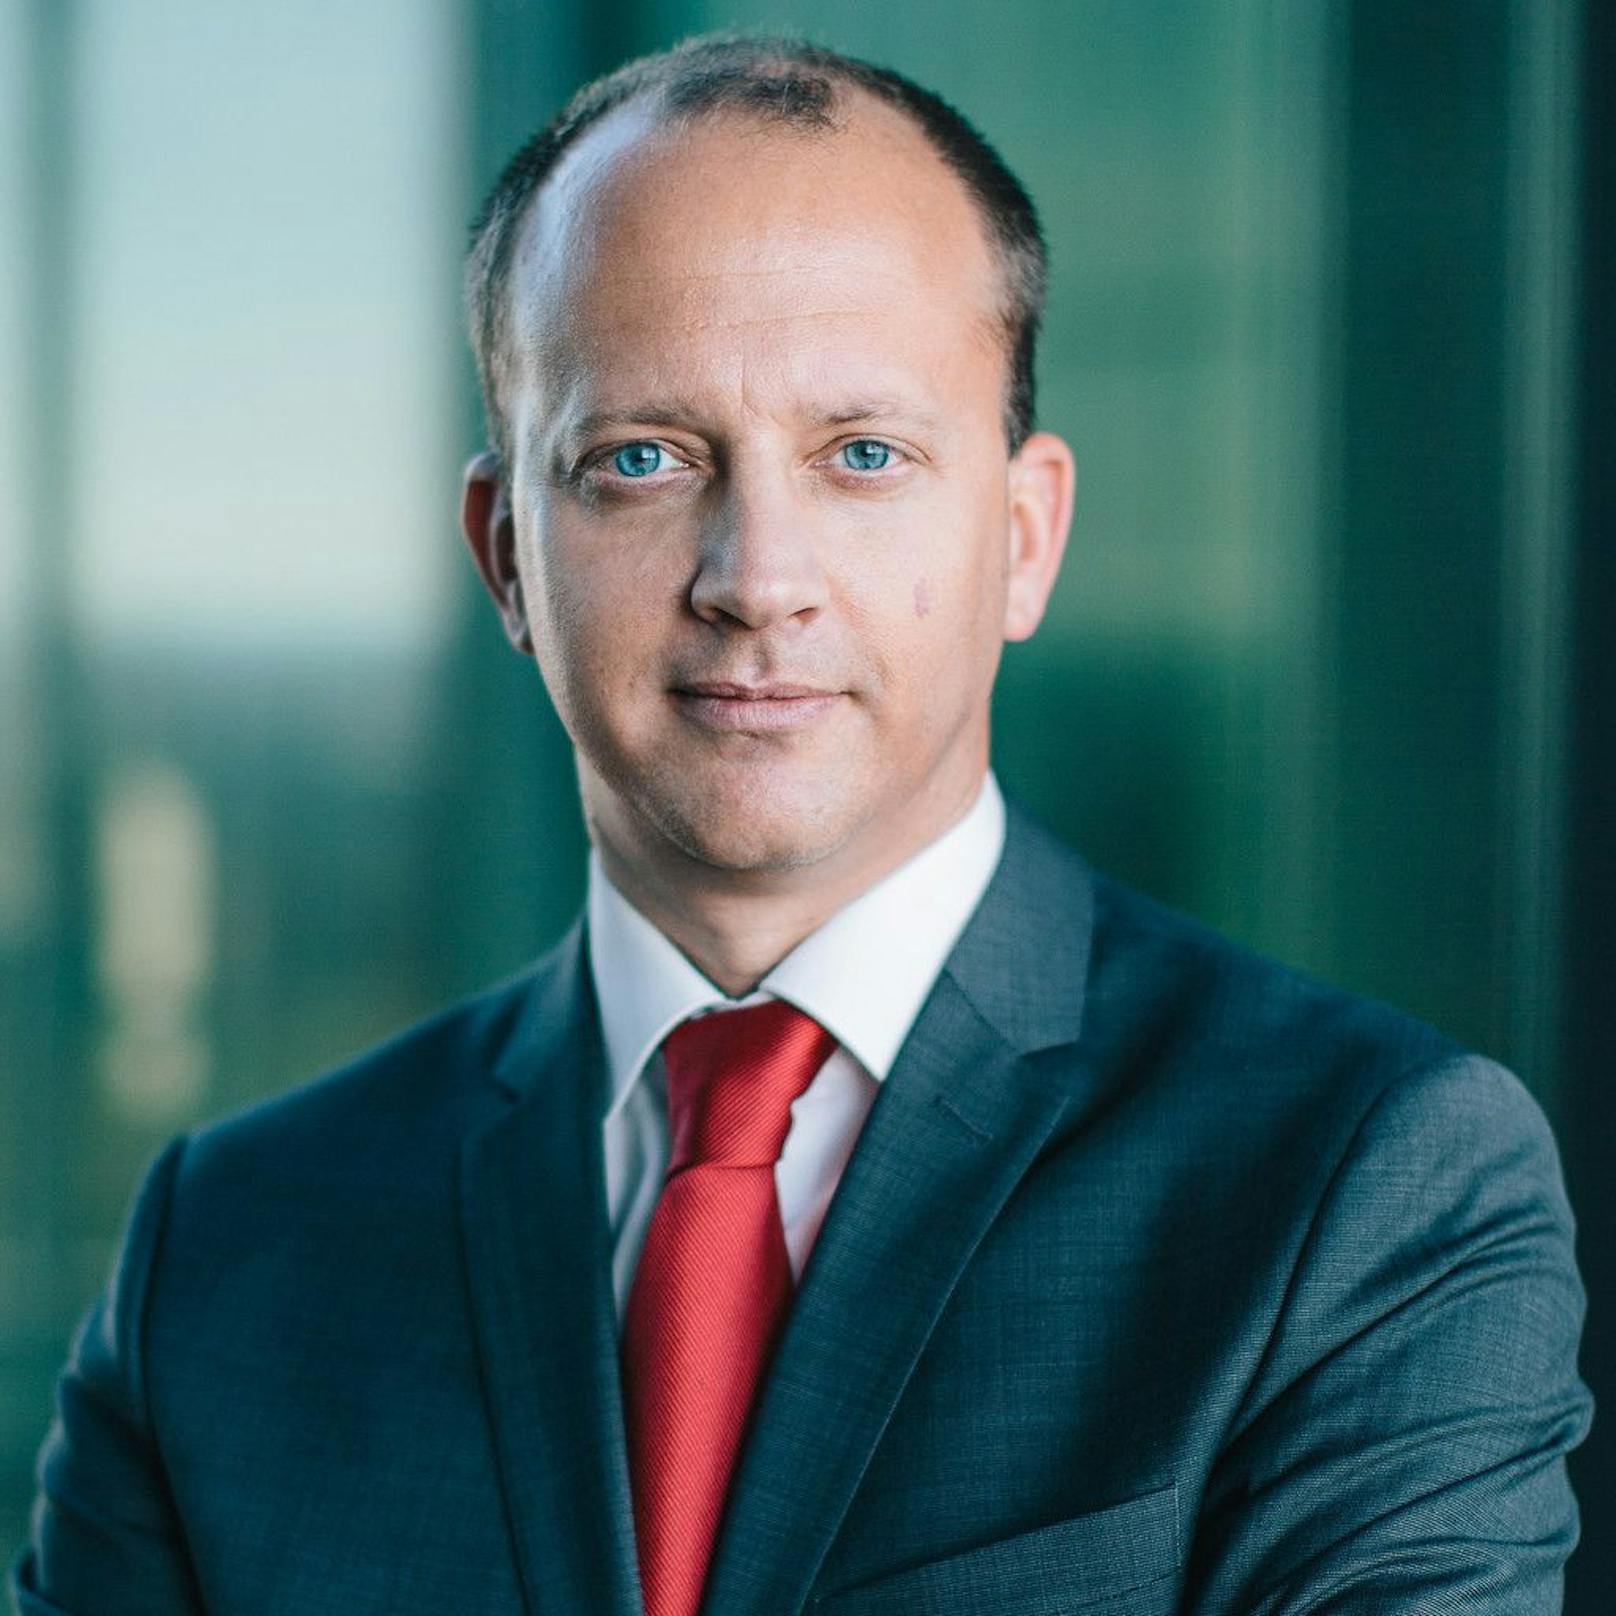 Martin Benesch wird zum Metallic Cloud Sales Manager berufen.